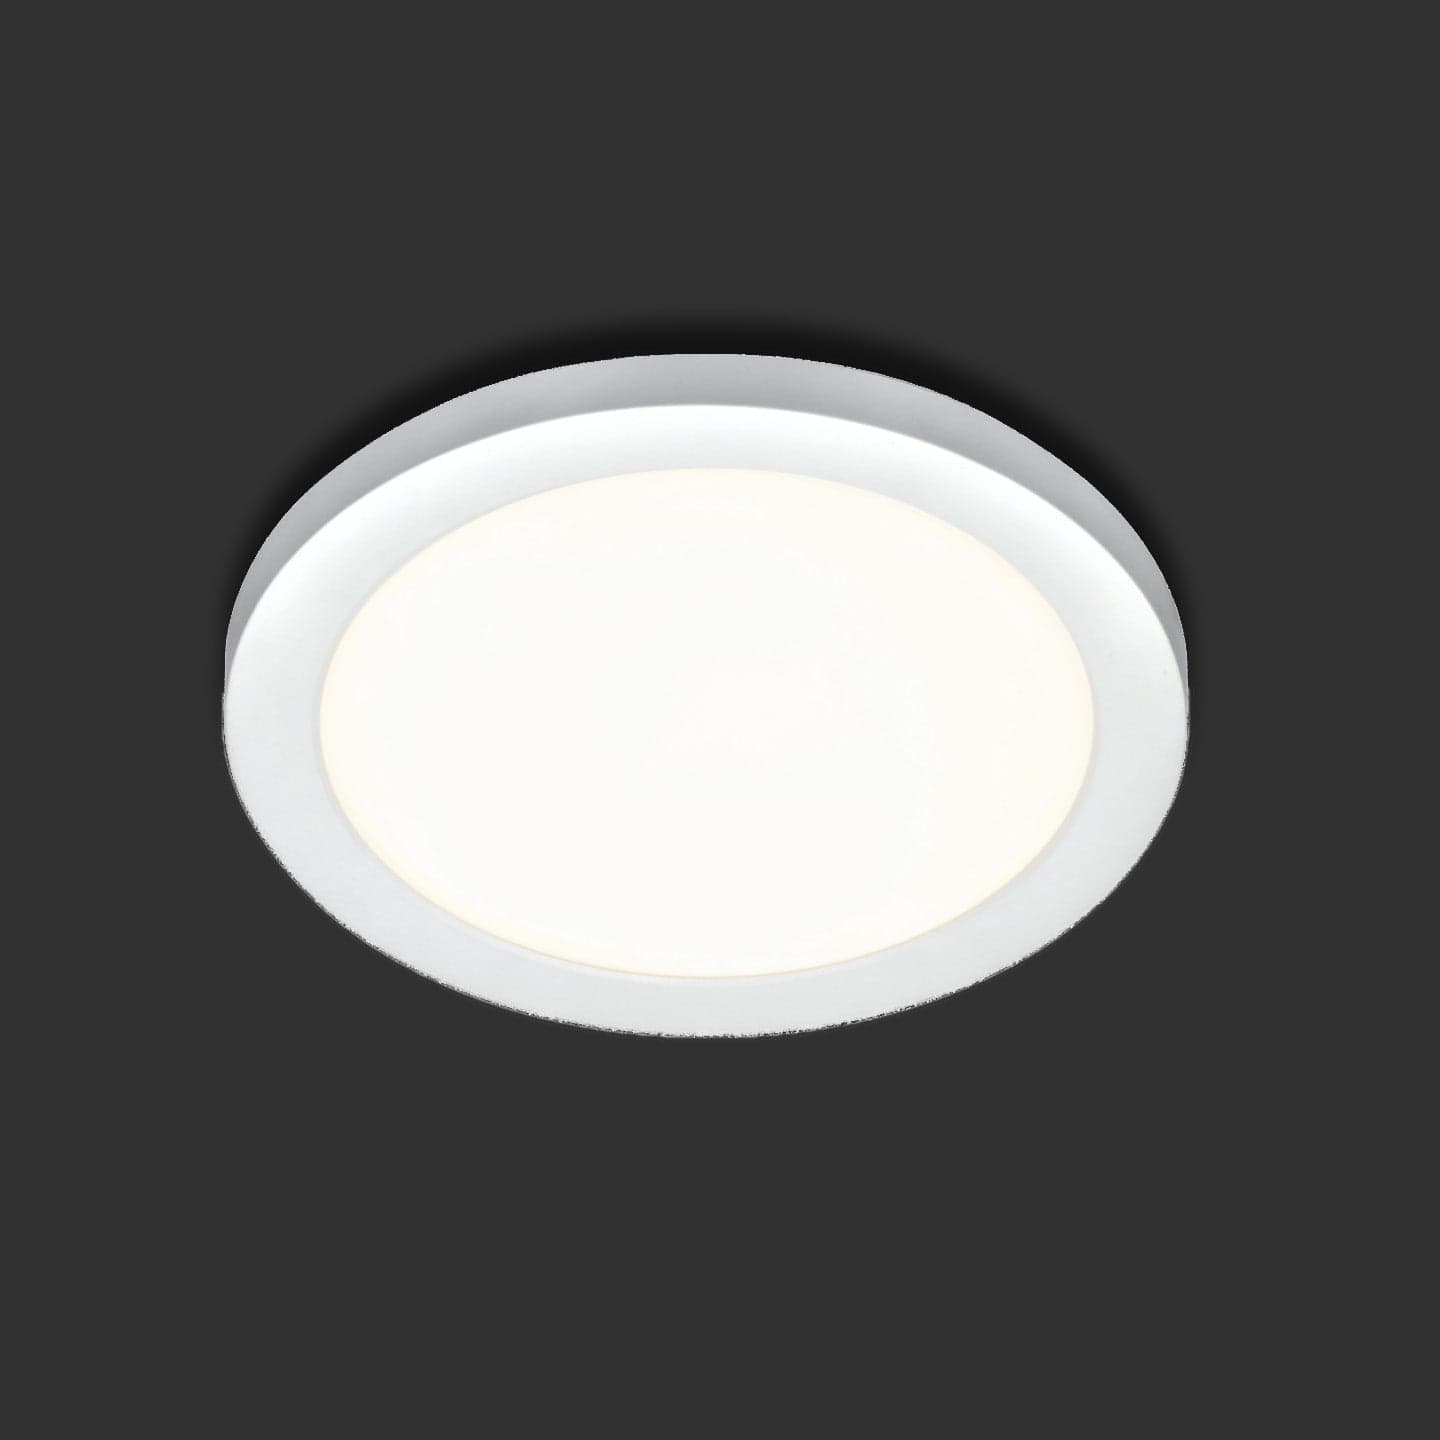 Lights  -  Le Harve White 18w LED Flush Bathroom Light  -  50155596